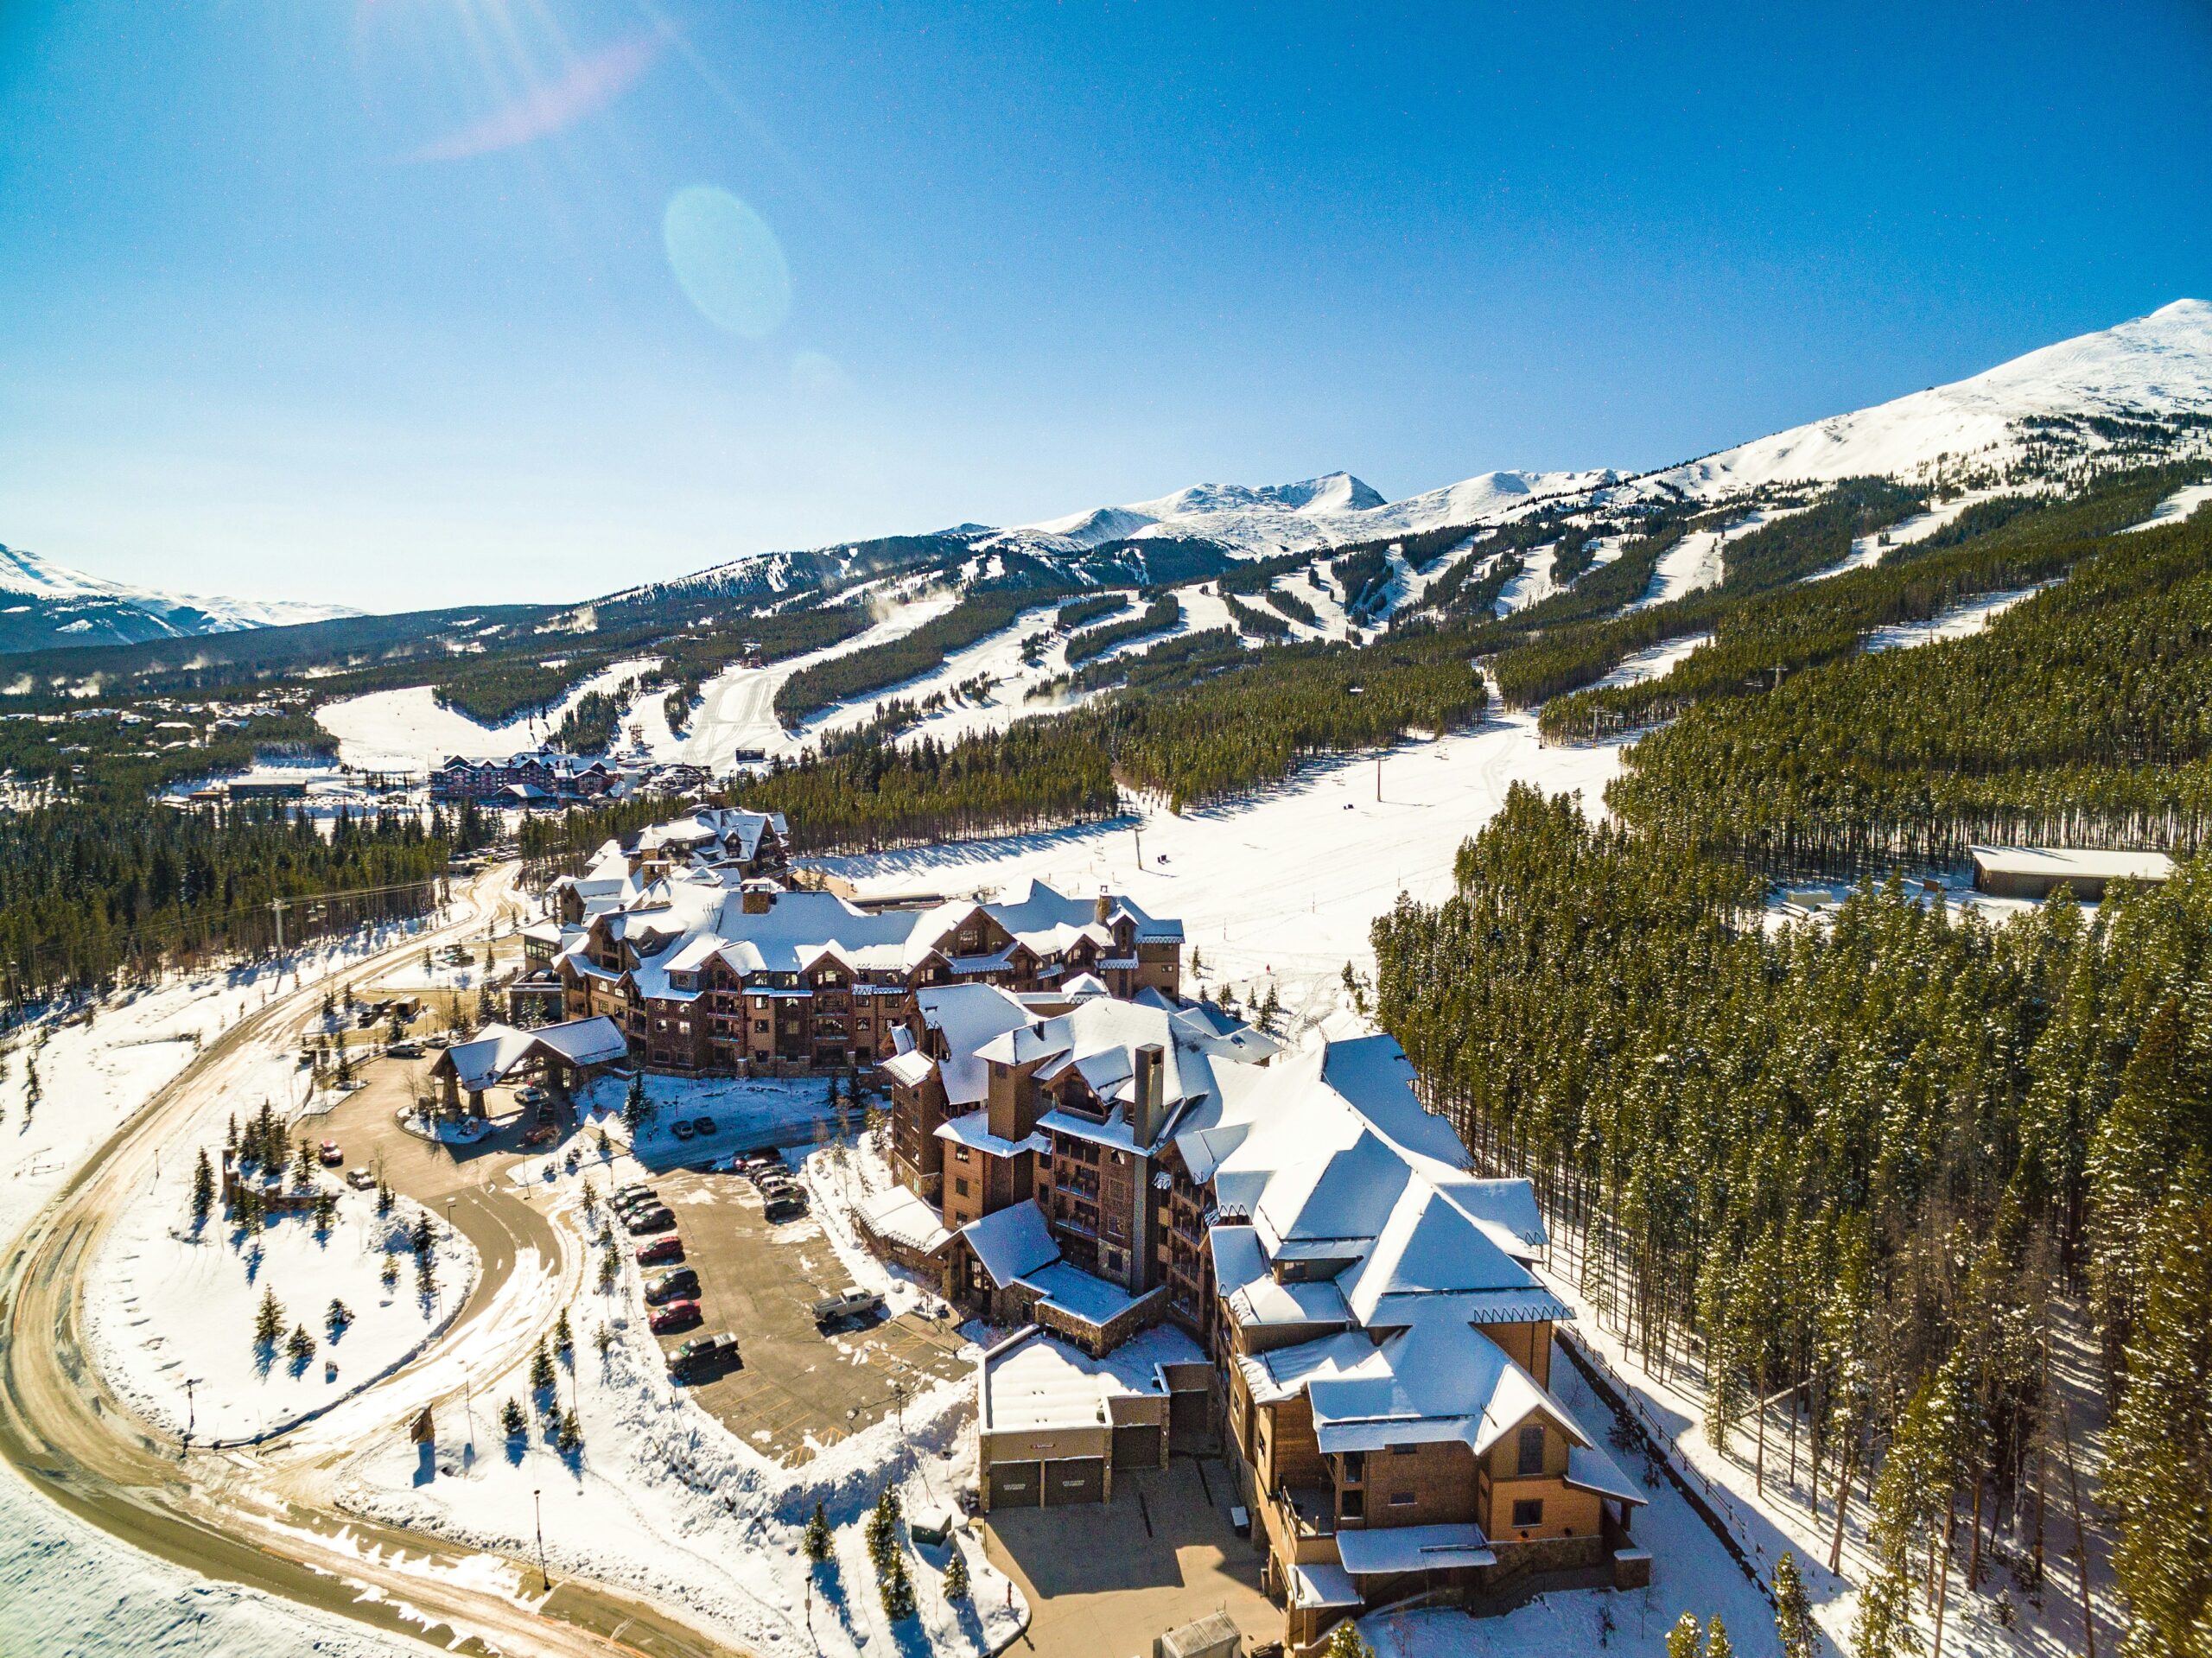 view of Breckenridge ski resort from above